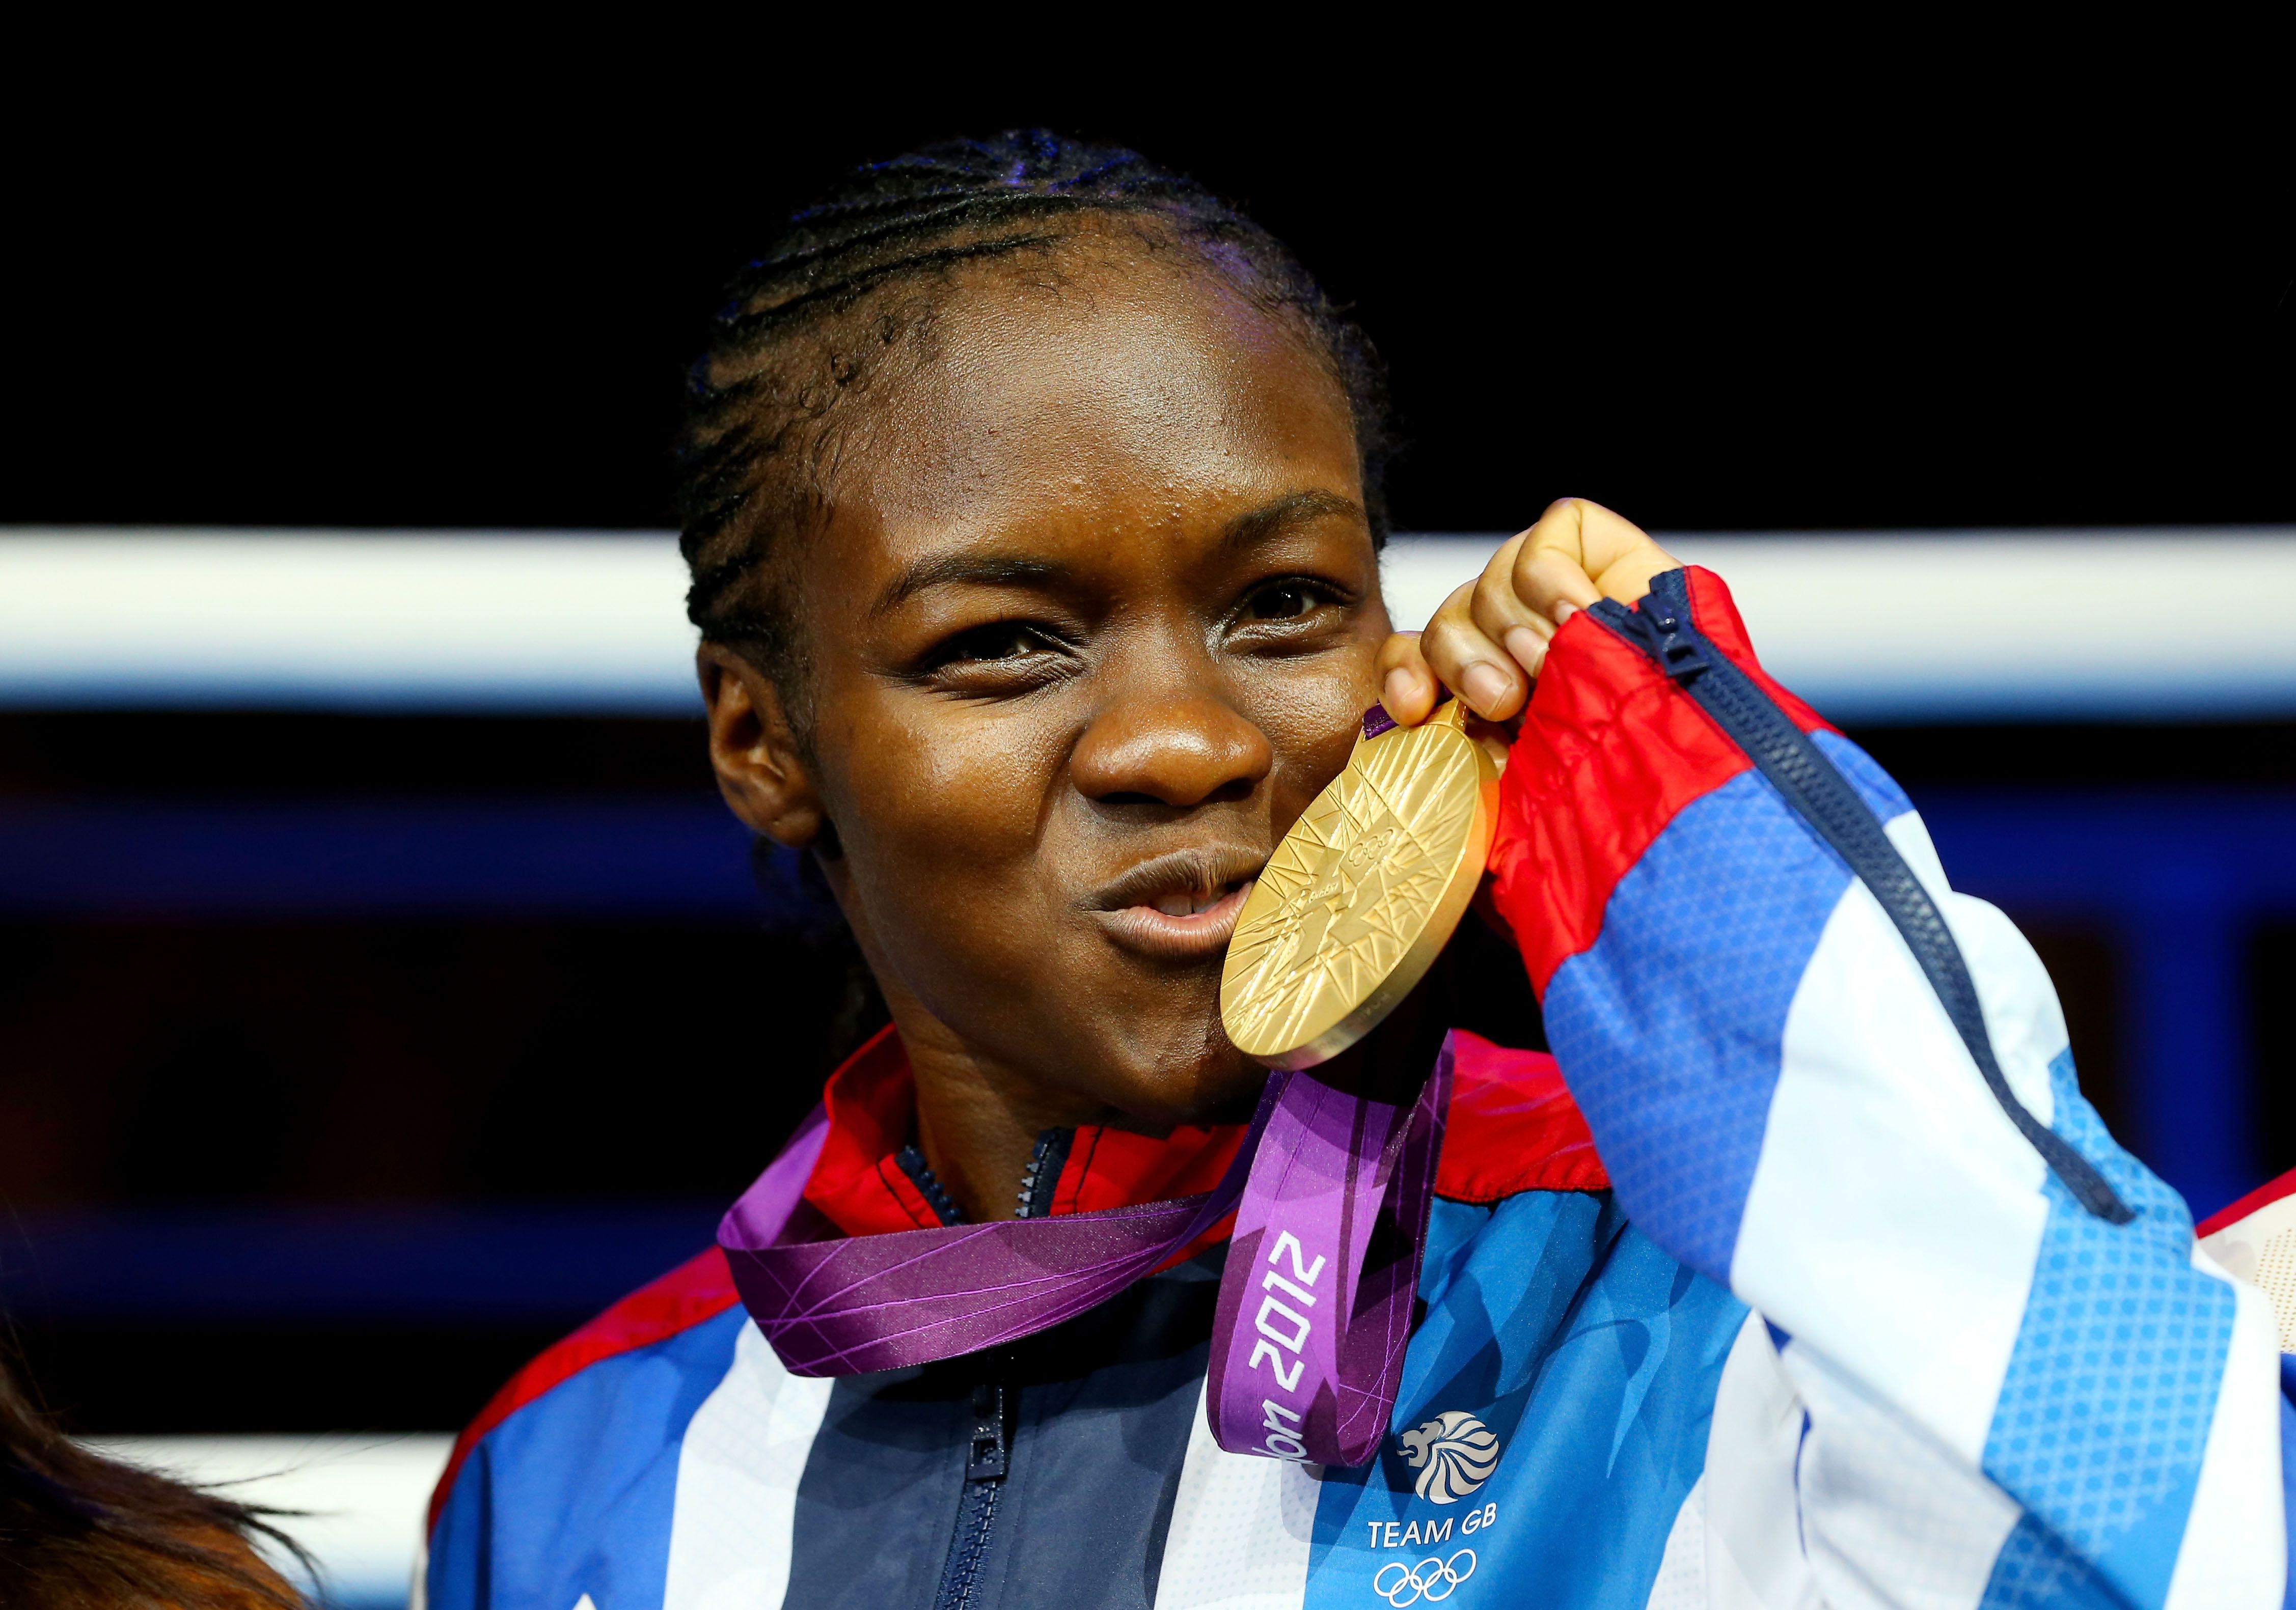 Nicola Adams wins gold at London 2012 Olympics